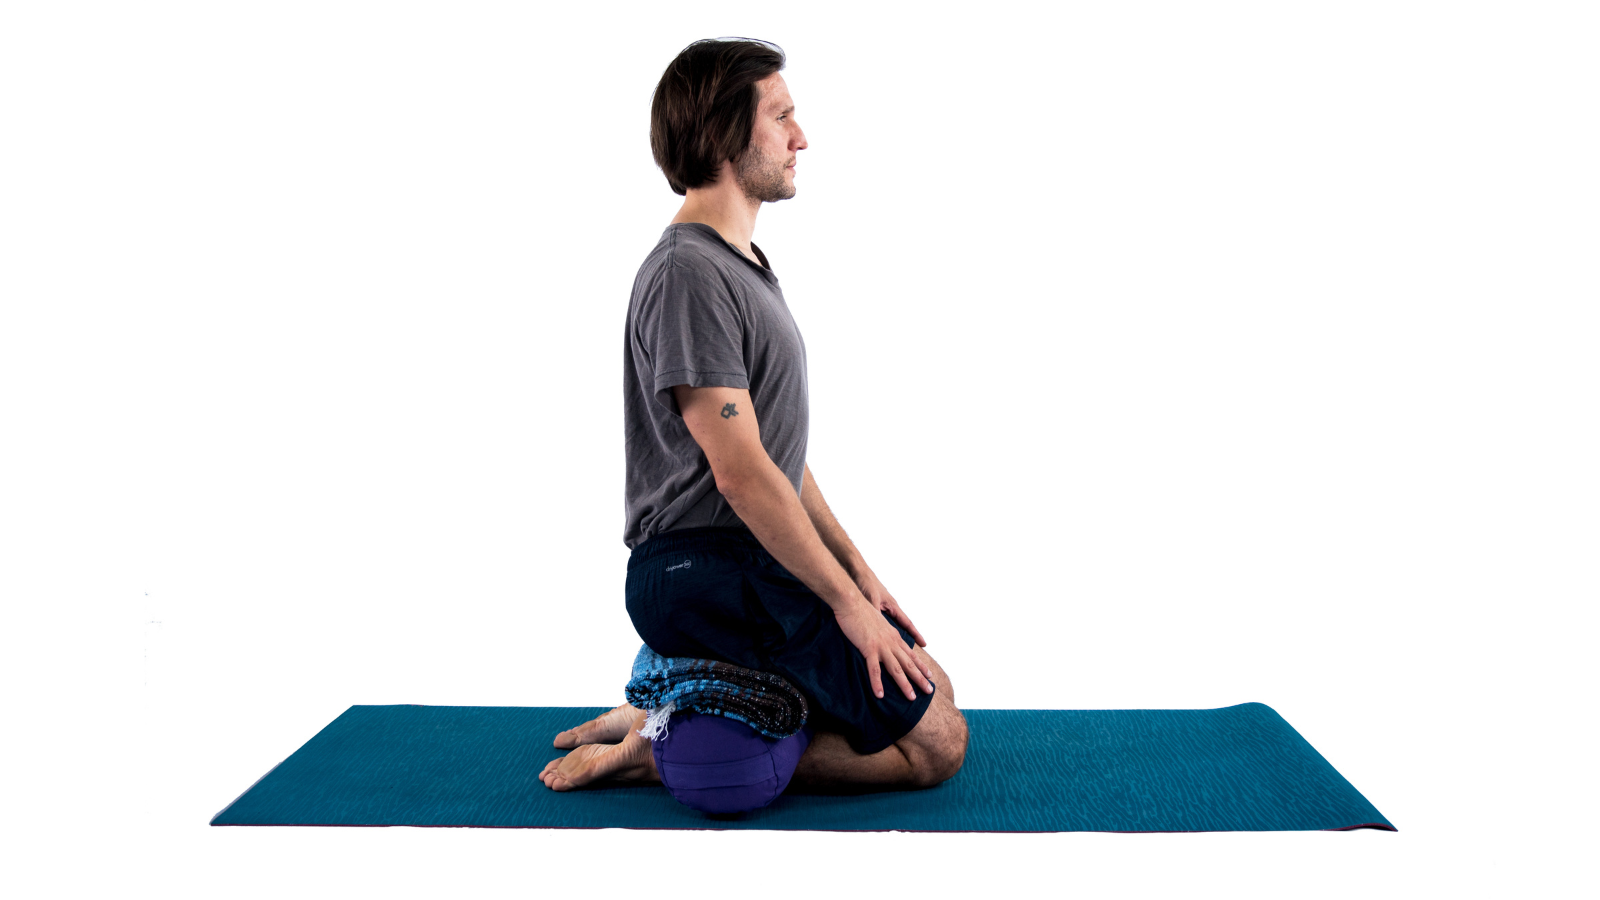 Hero's Pose or Virasana is a comfortable alternative seated yoga pose.